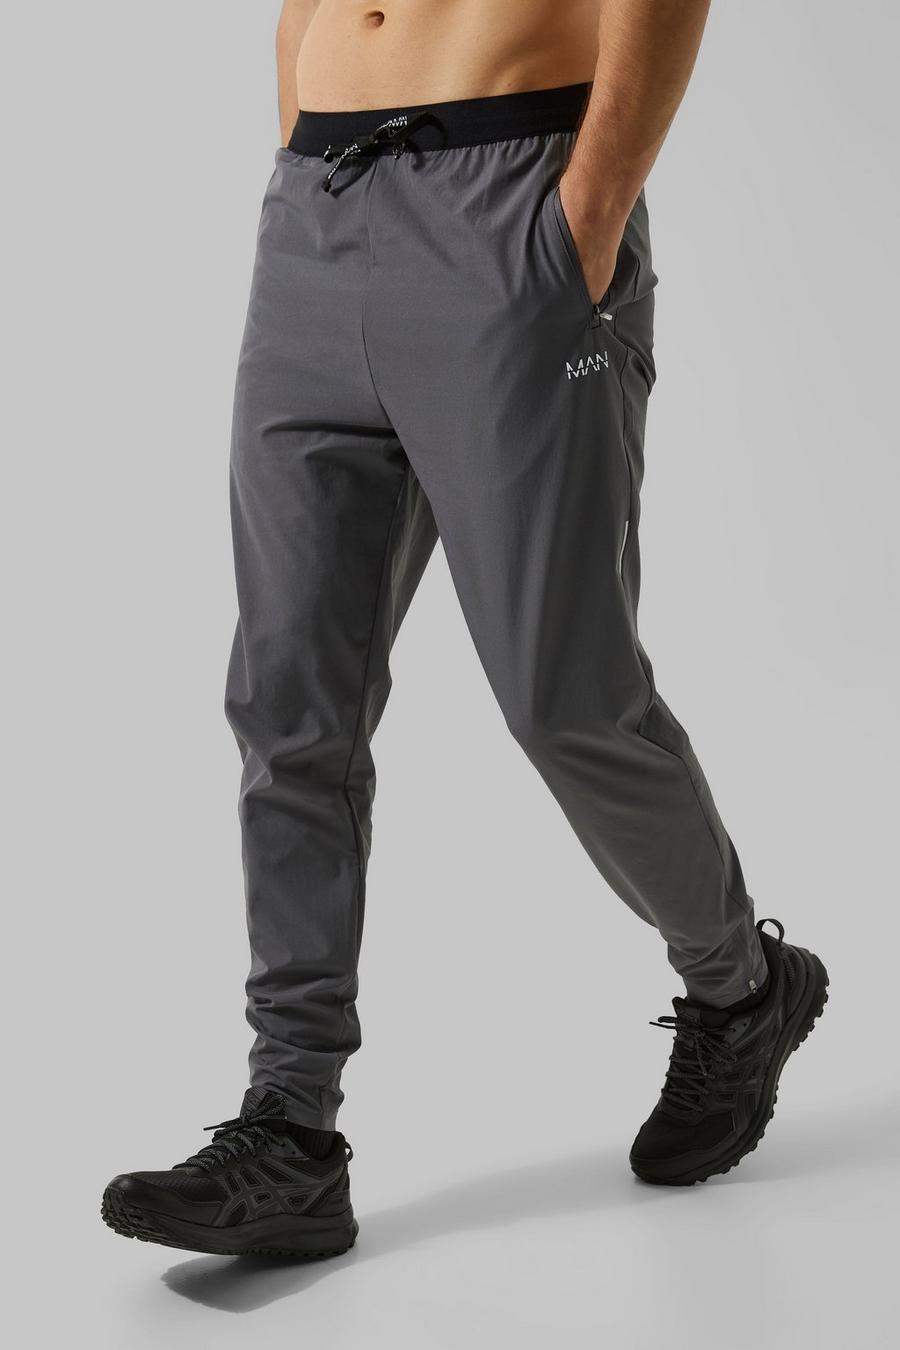 Pantalón deportivo Tall MAN Active ligero resistente, Charcoal